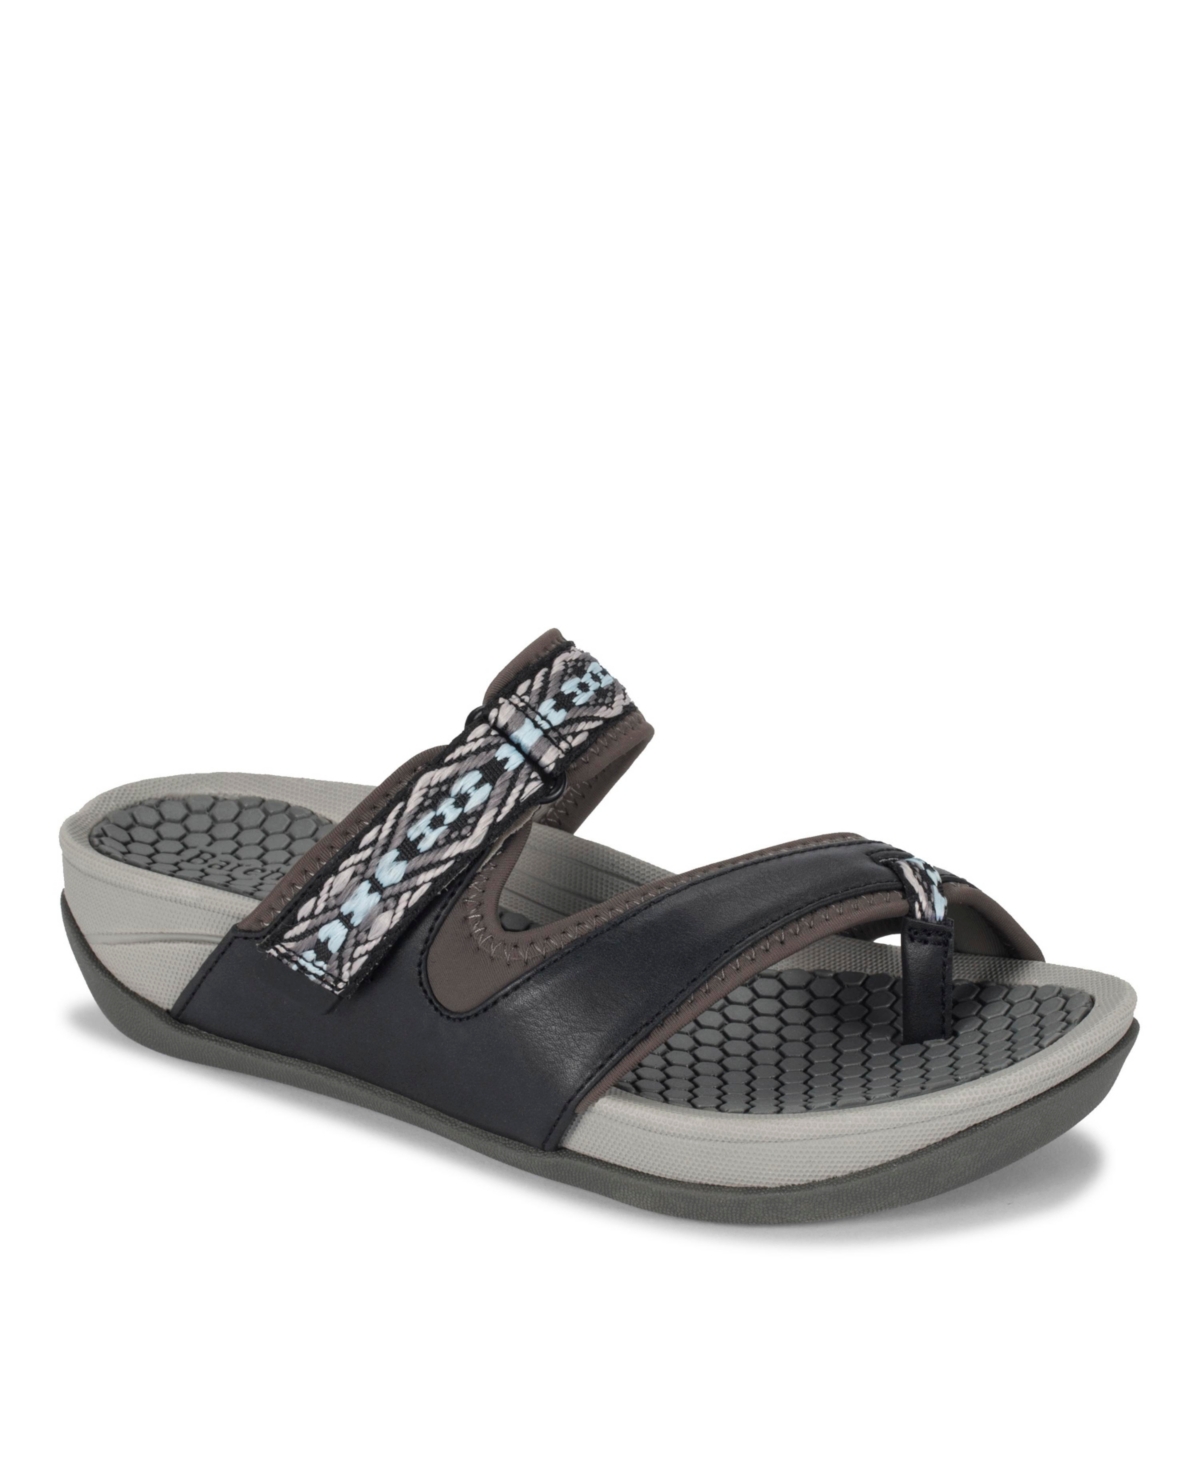 Baretraps Deserae Women's Slide Sandal Women's Shoes